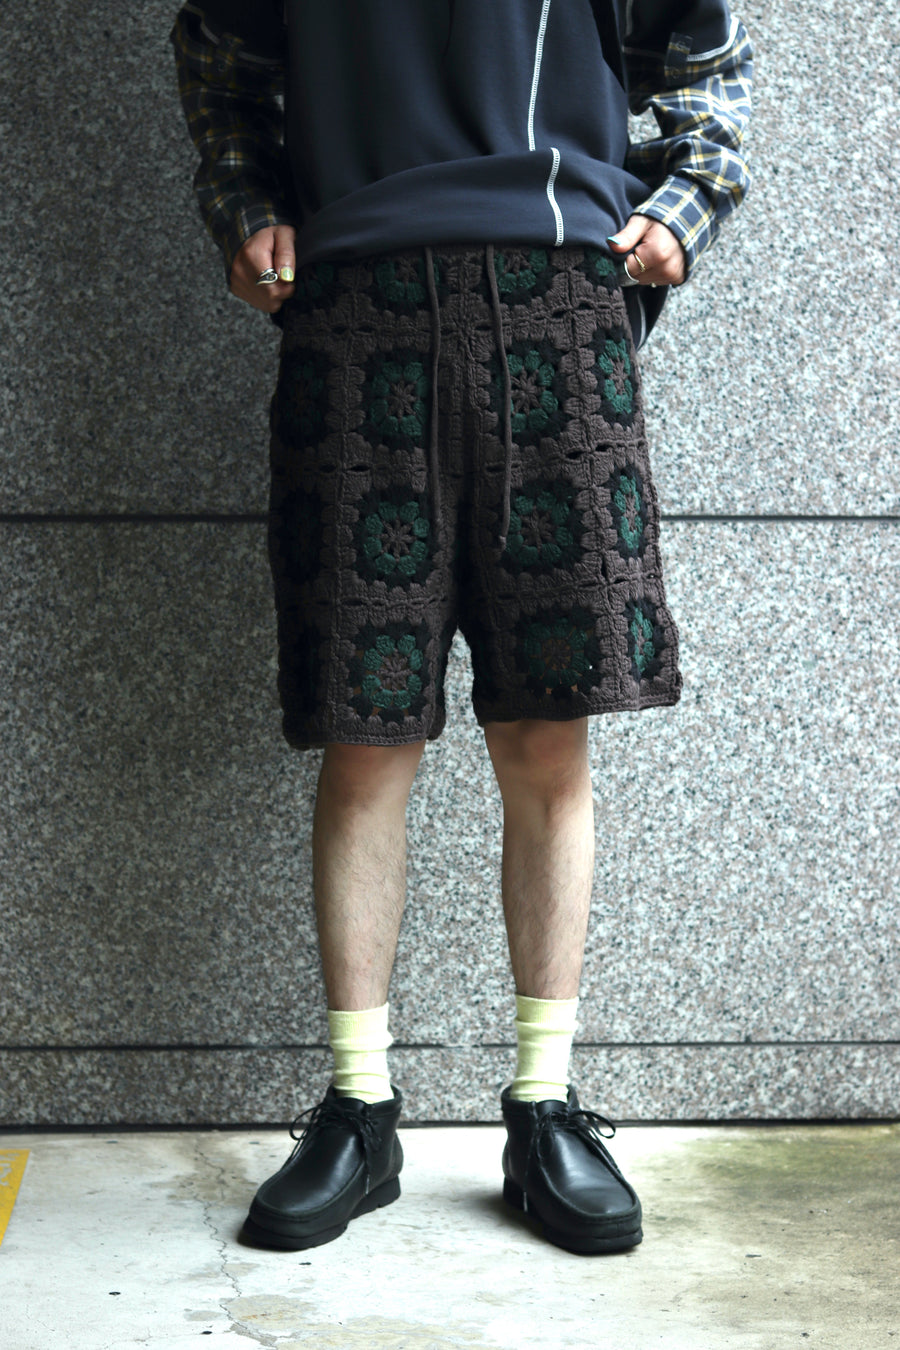 elephant TRIBAL fabrics  Crochet Knit Bermuda Shorts(GREEN BROWN)